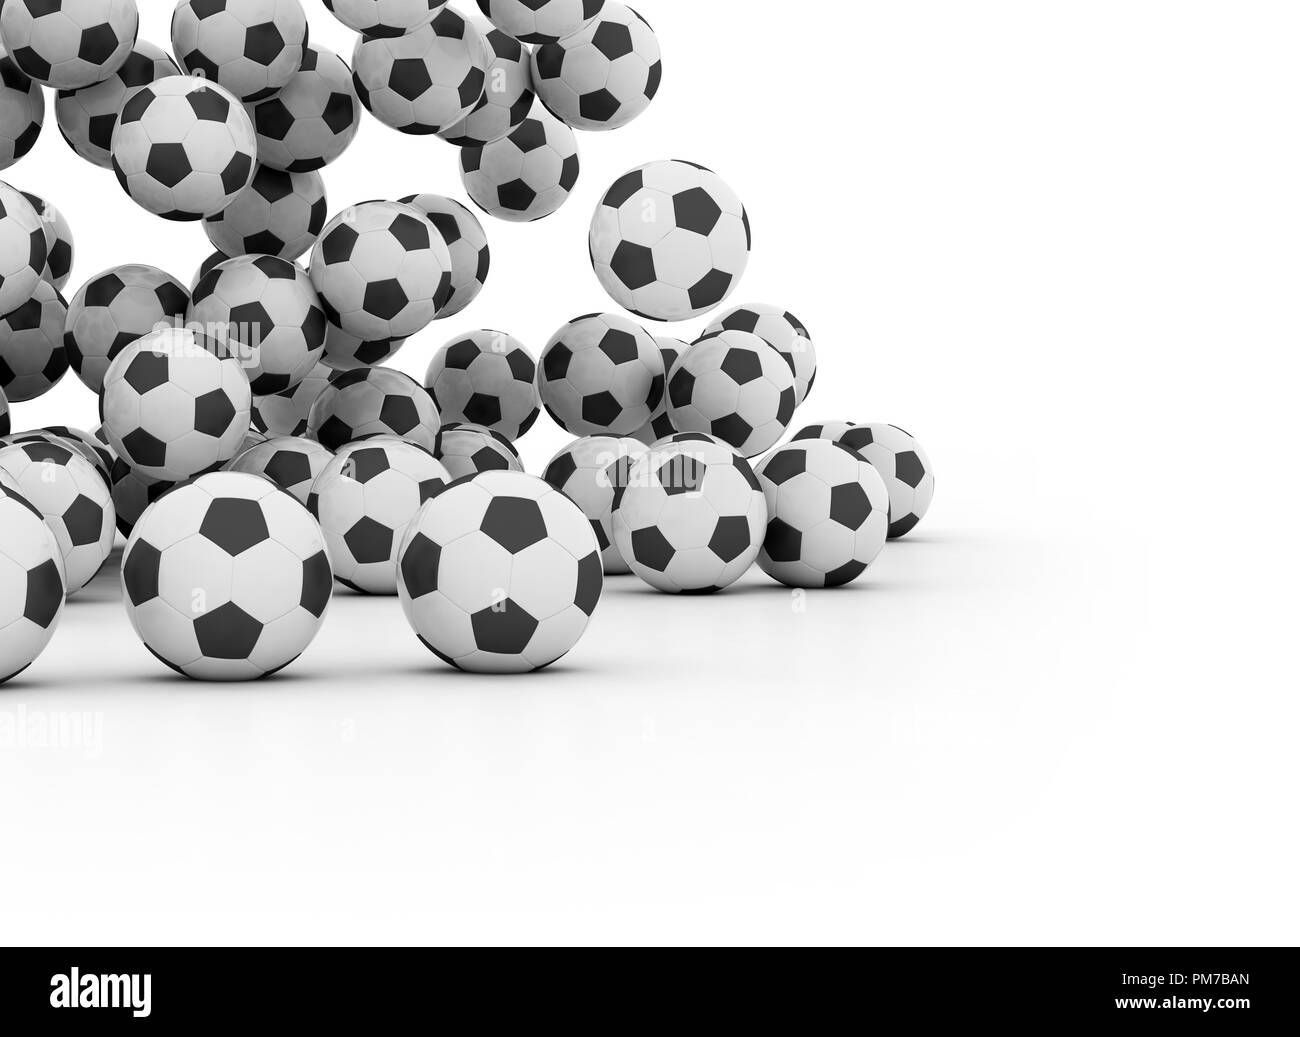 Group of falling soccer balls on white background Stock Photo